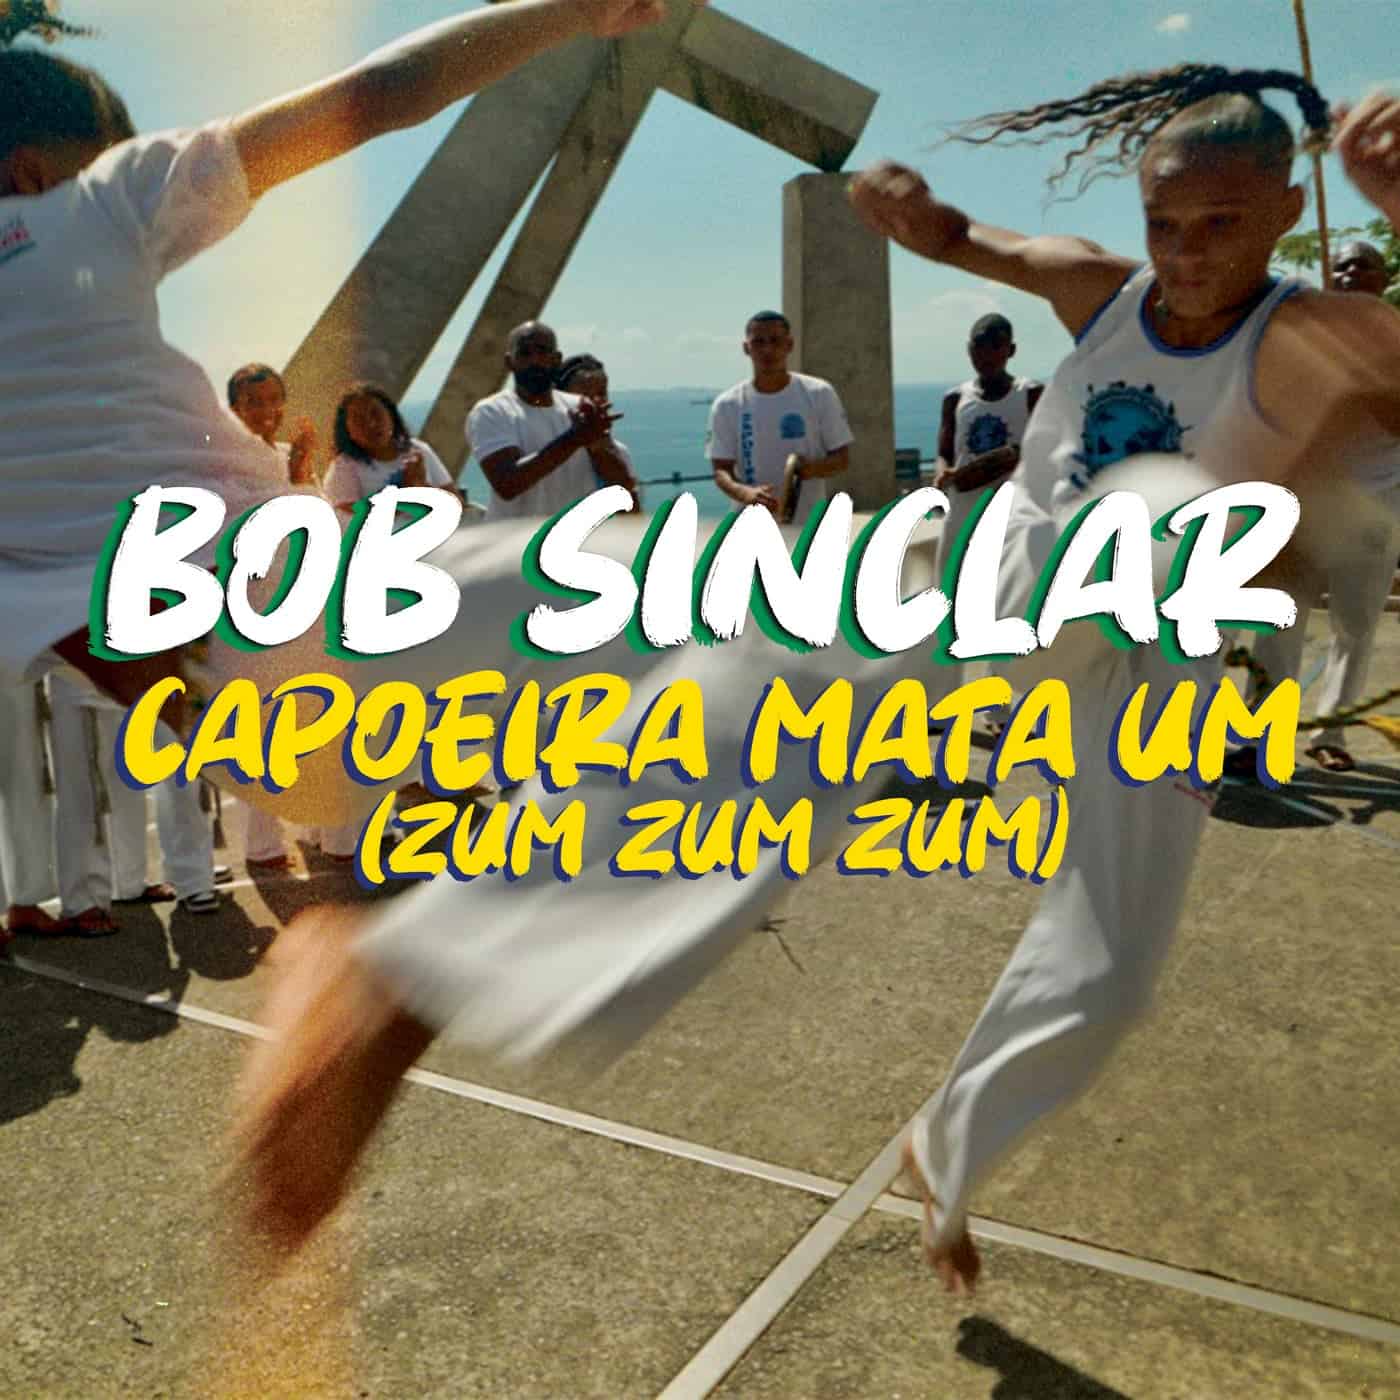 Download Bob Sinclar - Capoeira Mata Um (Zum Zum Zum) on Electrobuzz